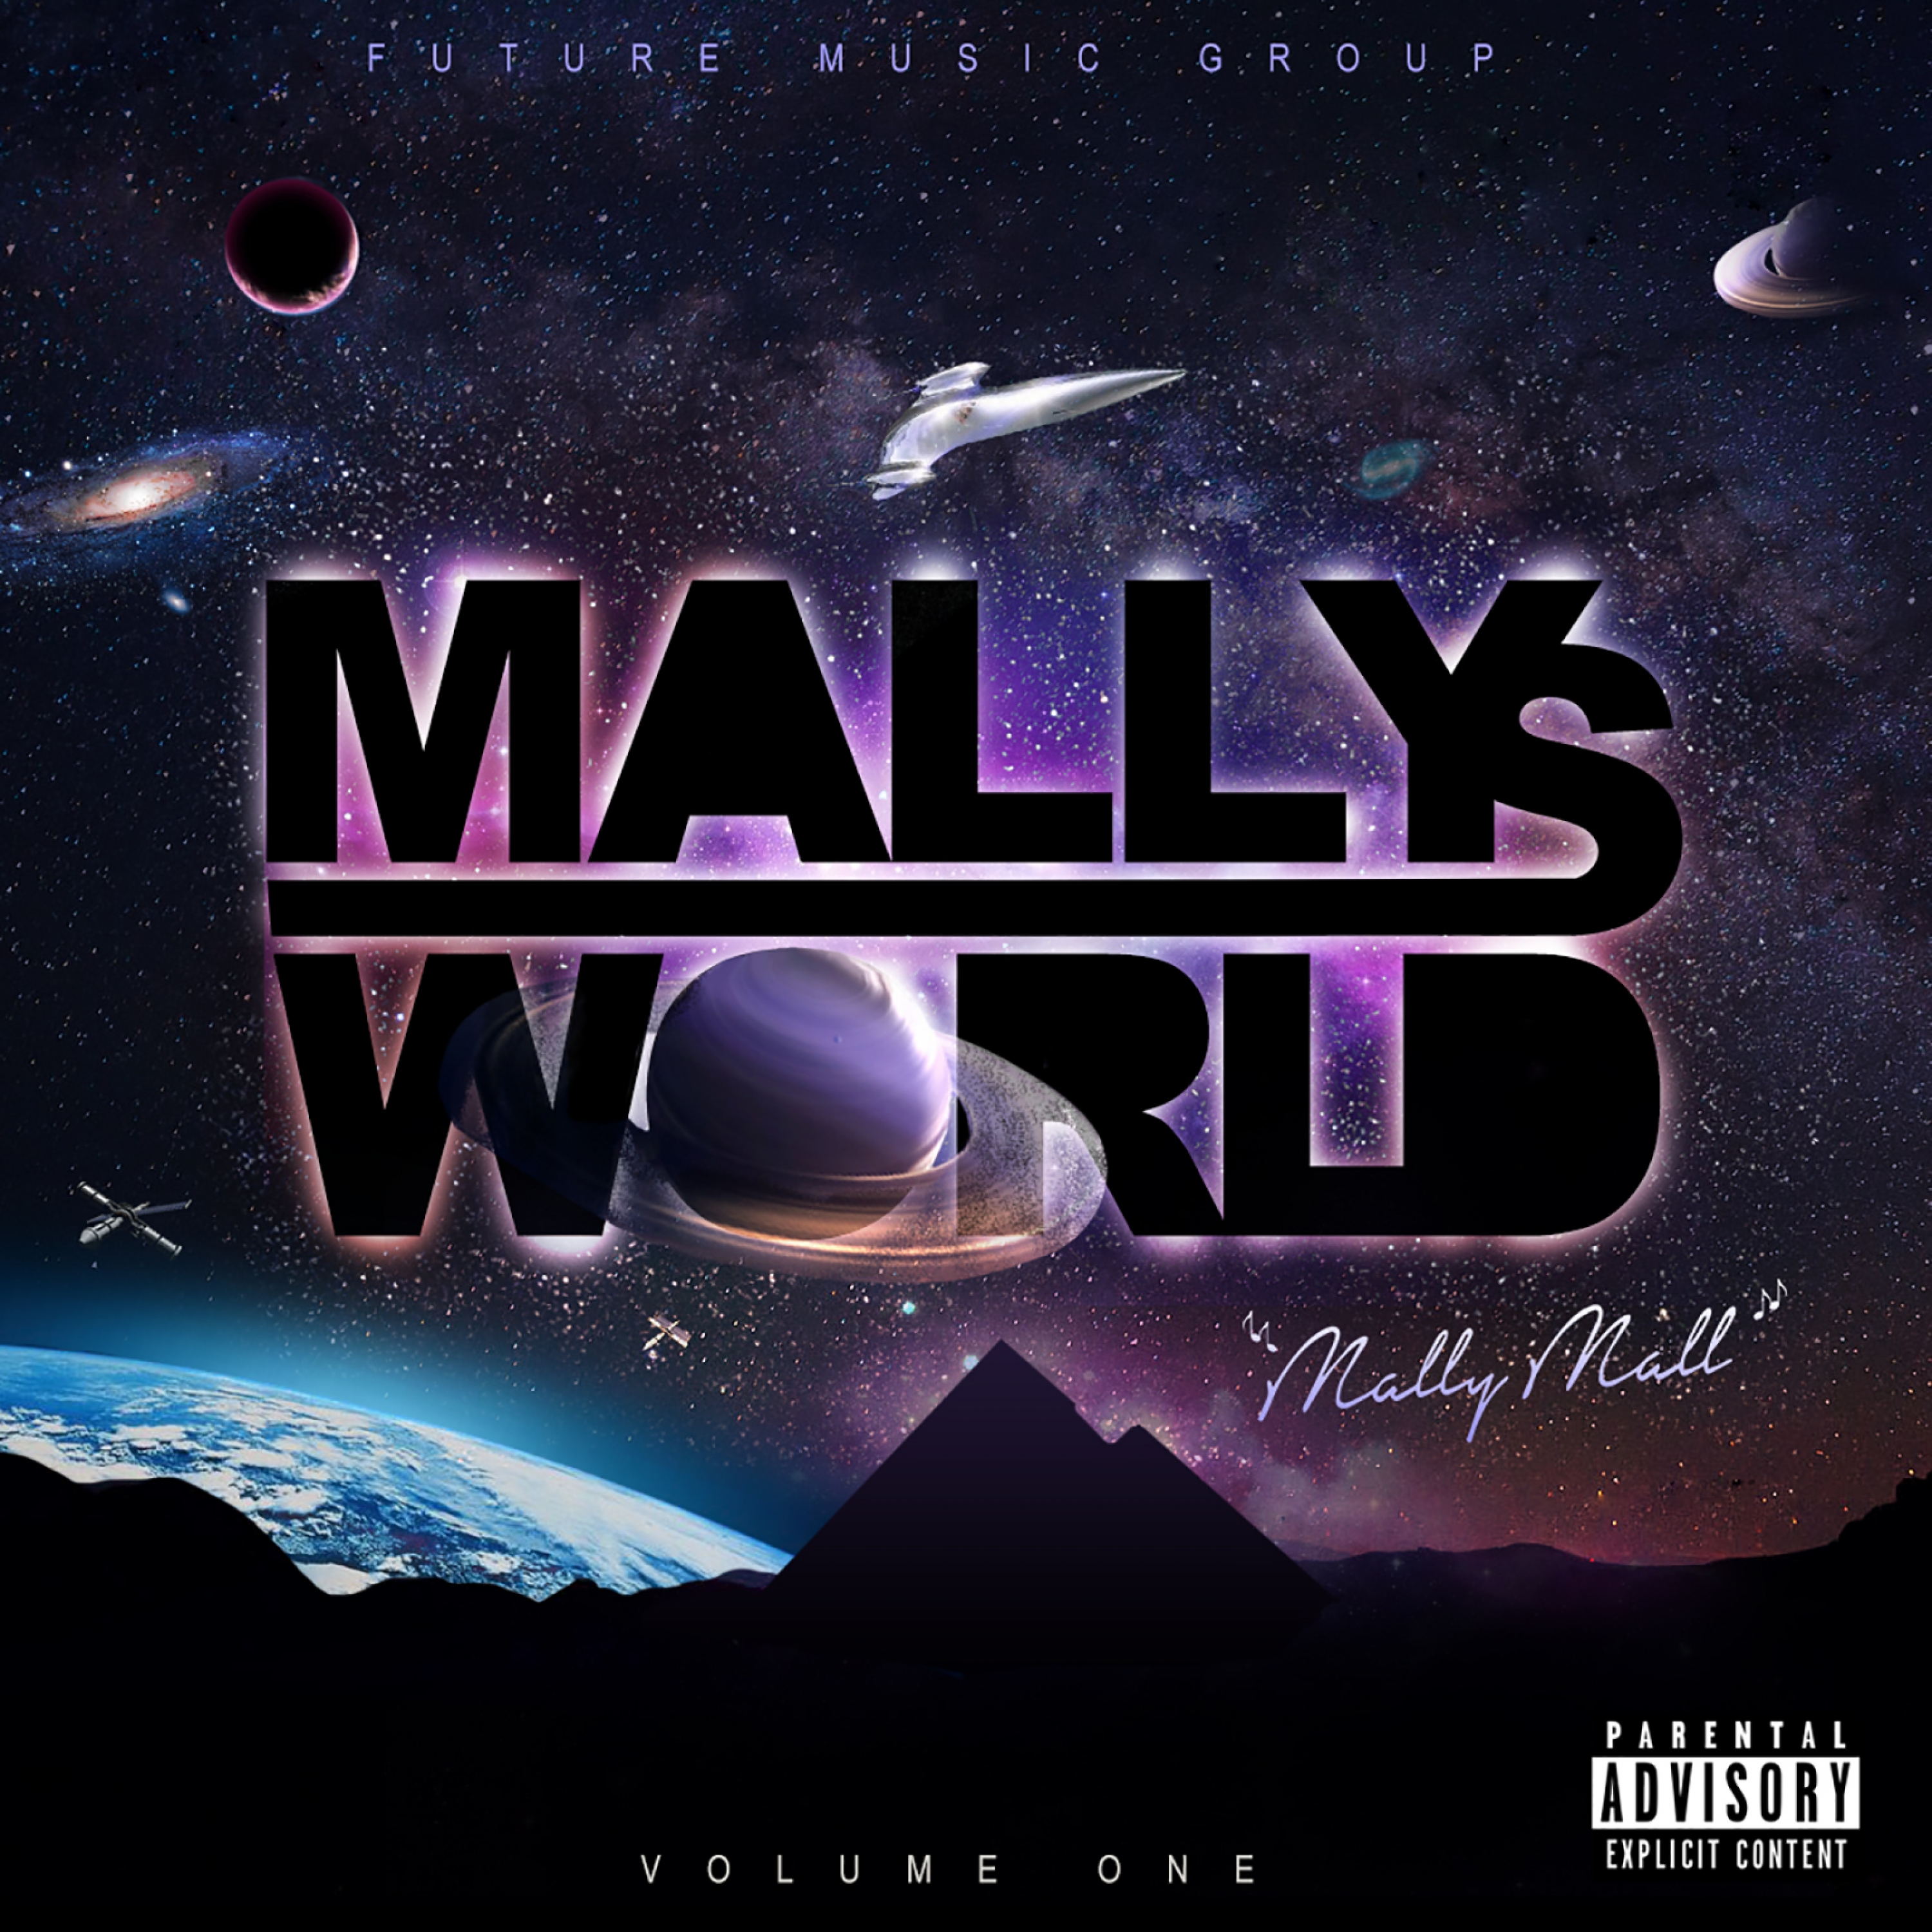 Mallys World, Vol. 1